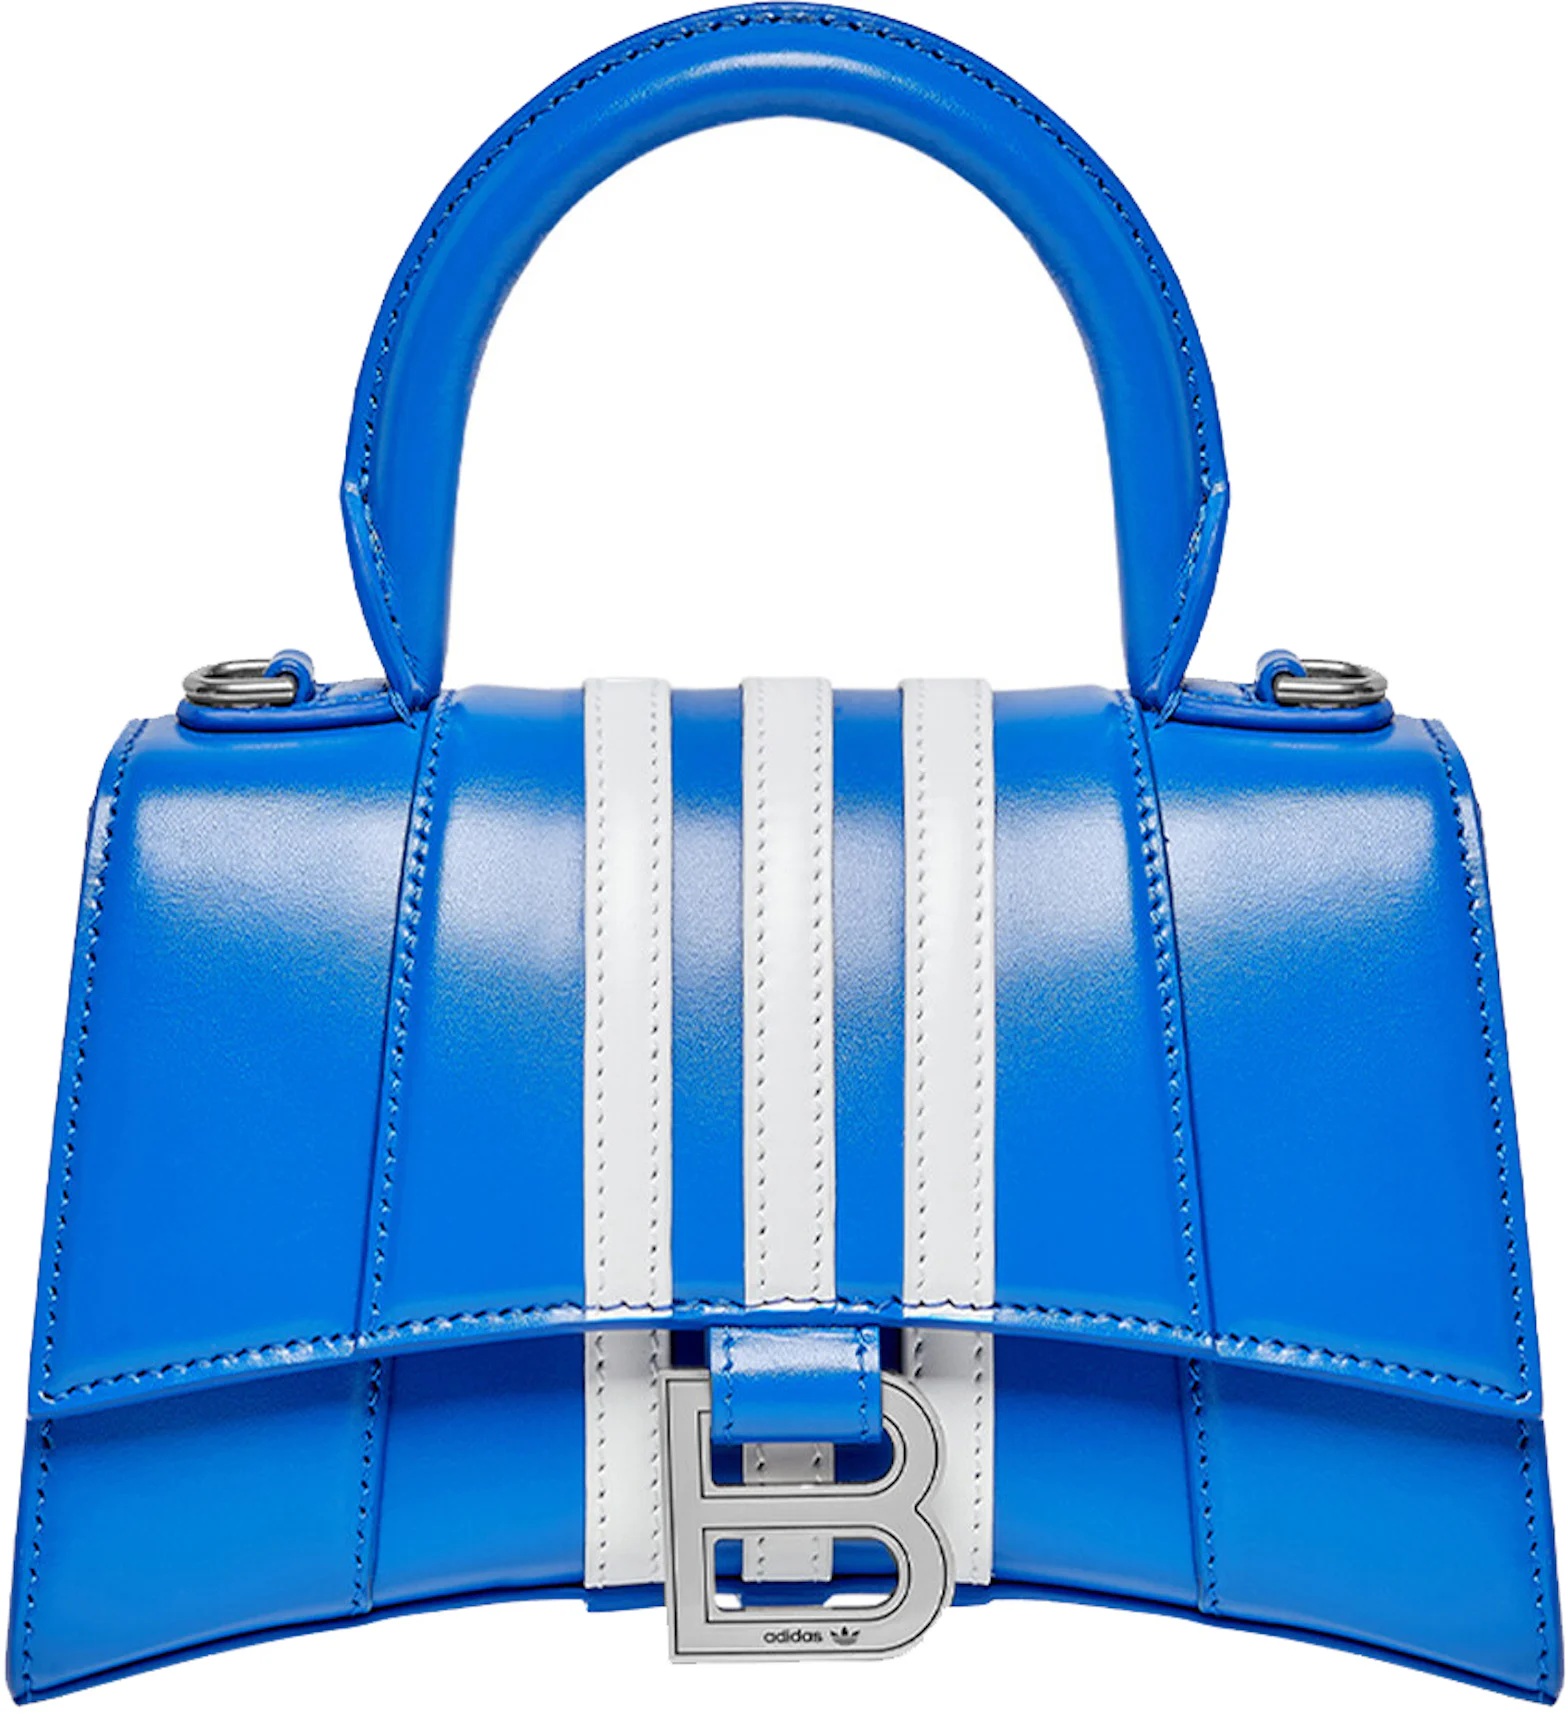 Balenciaga x adidas Hourglass XS Box Handbag Blue in Shiny Box Calfskin ...